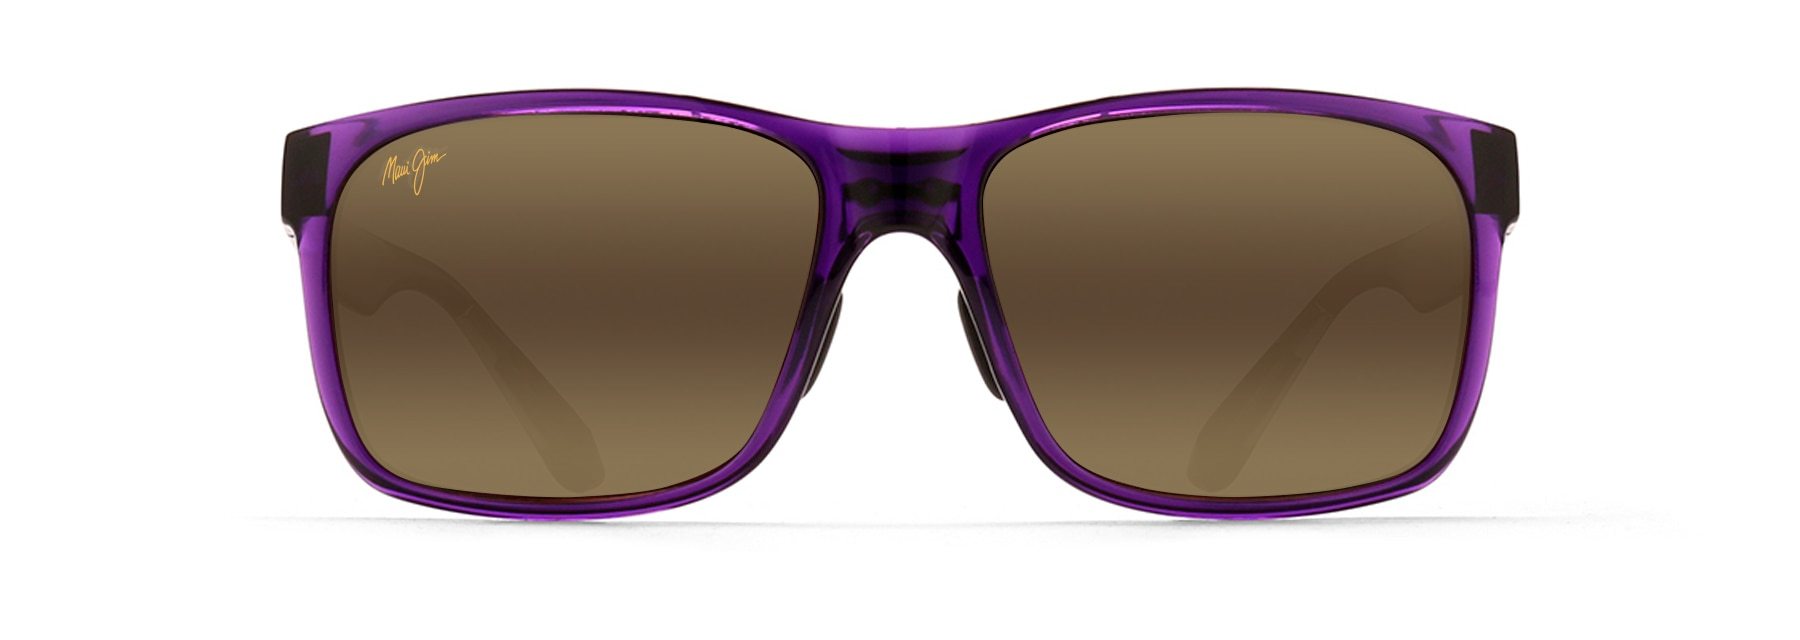 MyMaui Red Sands MM432-020 Sunglasses